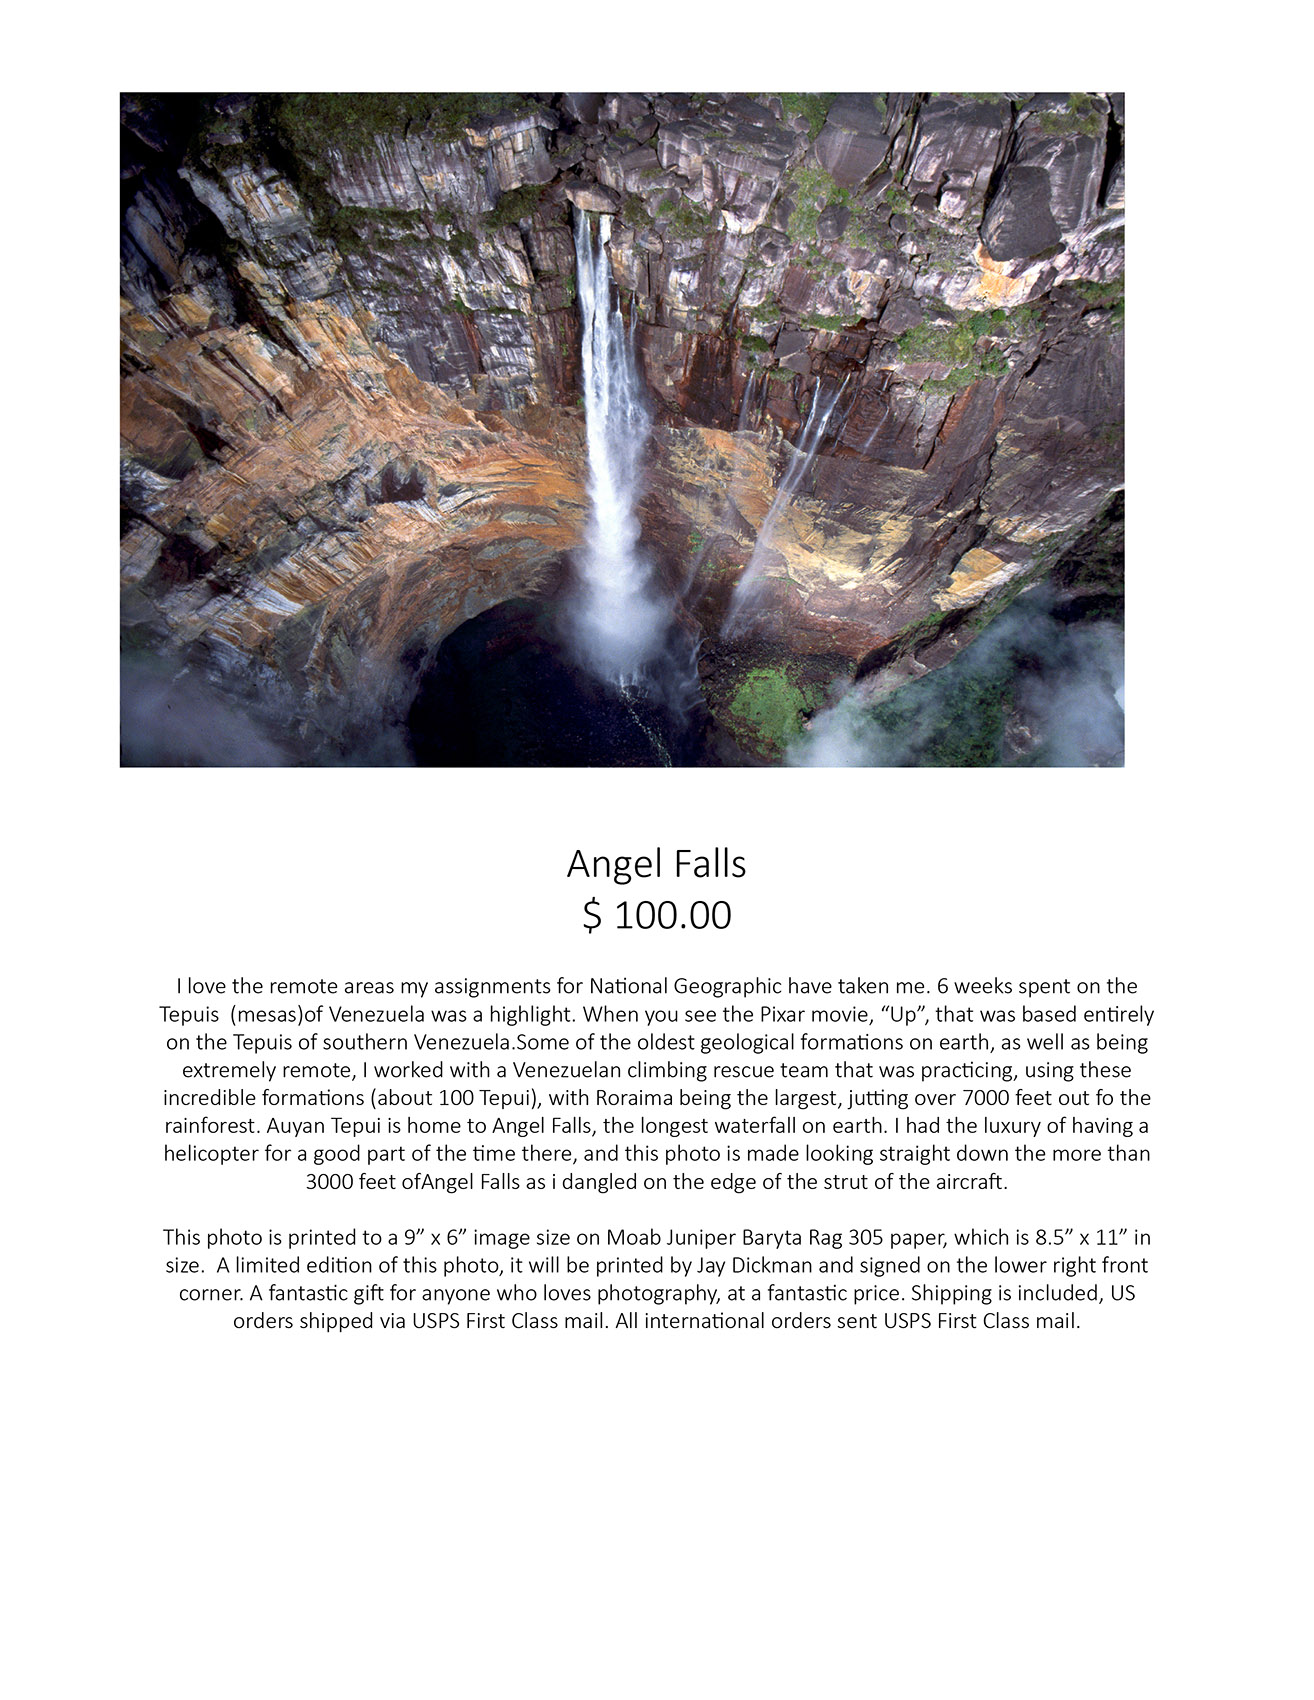 Angel Falls Birds-Eye View